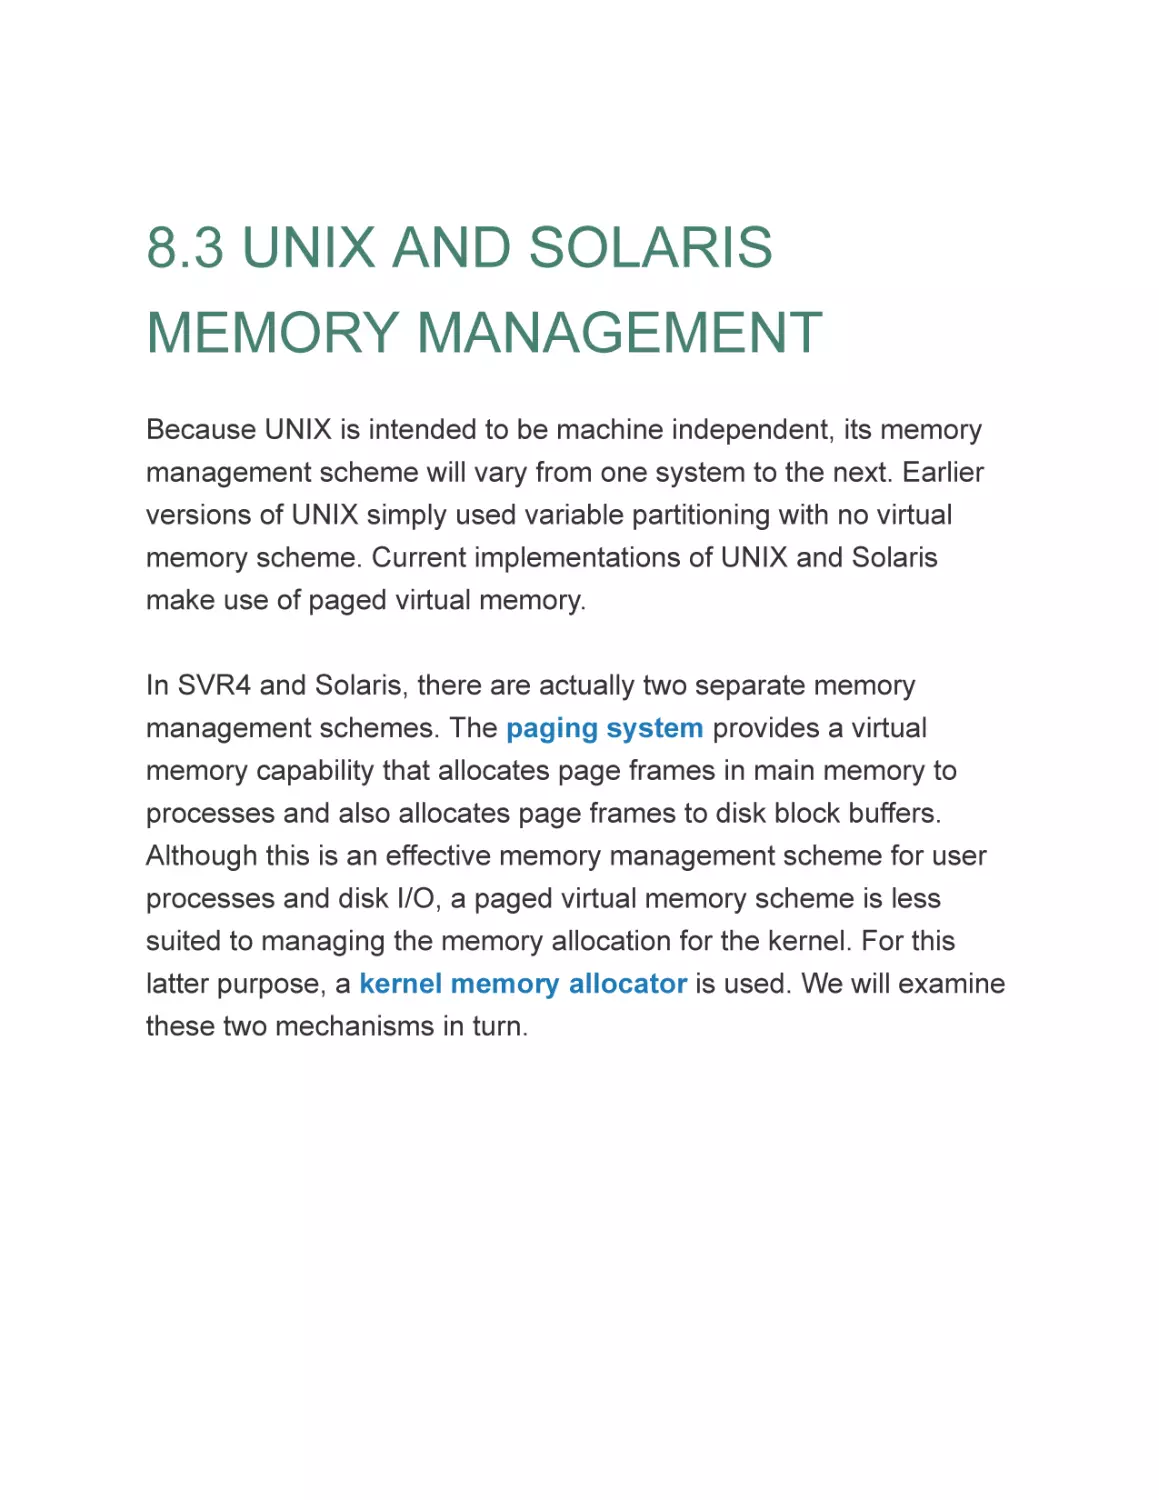 8.3 UNIX AND SOLARIS MEMORY MANAGEMENT